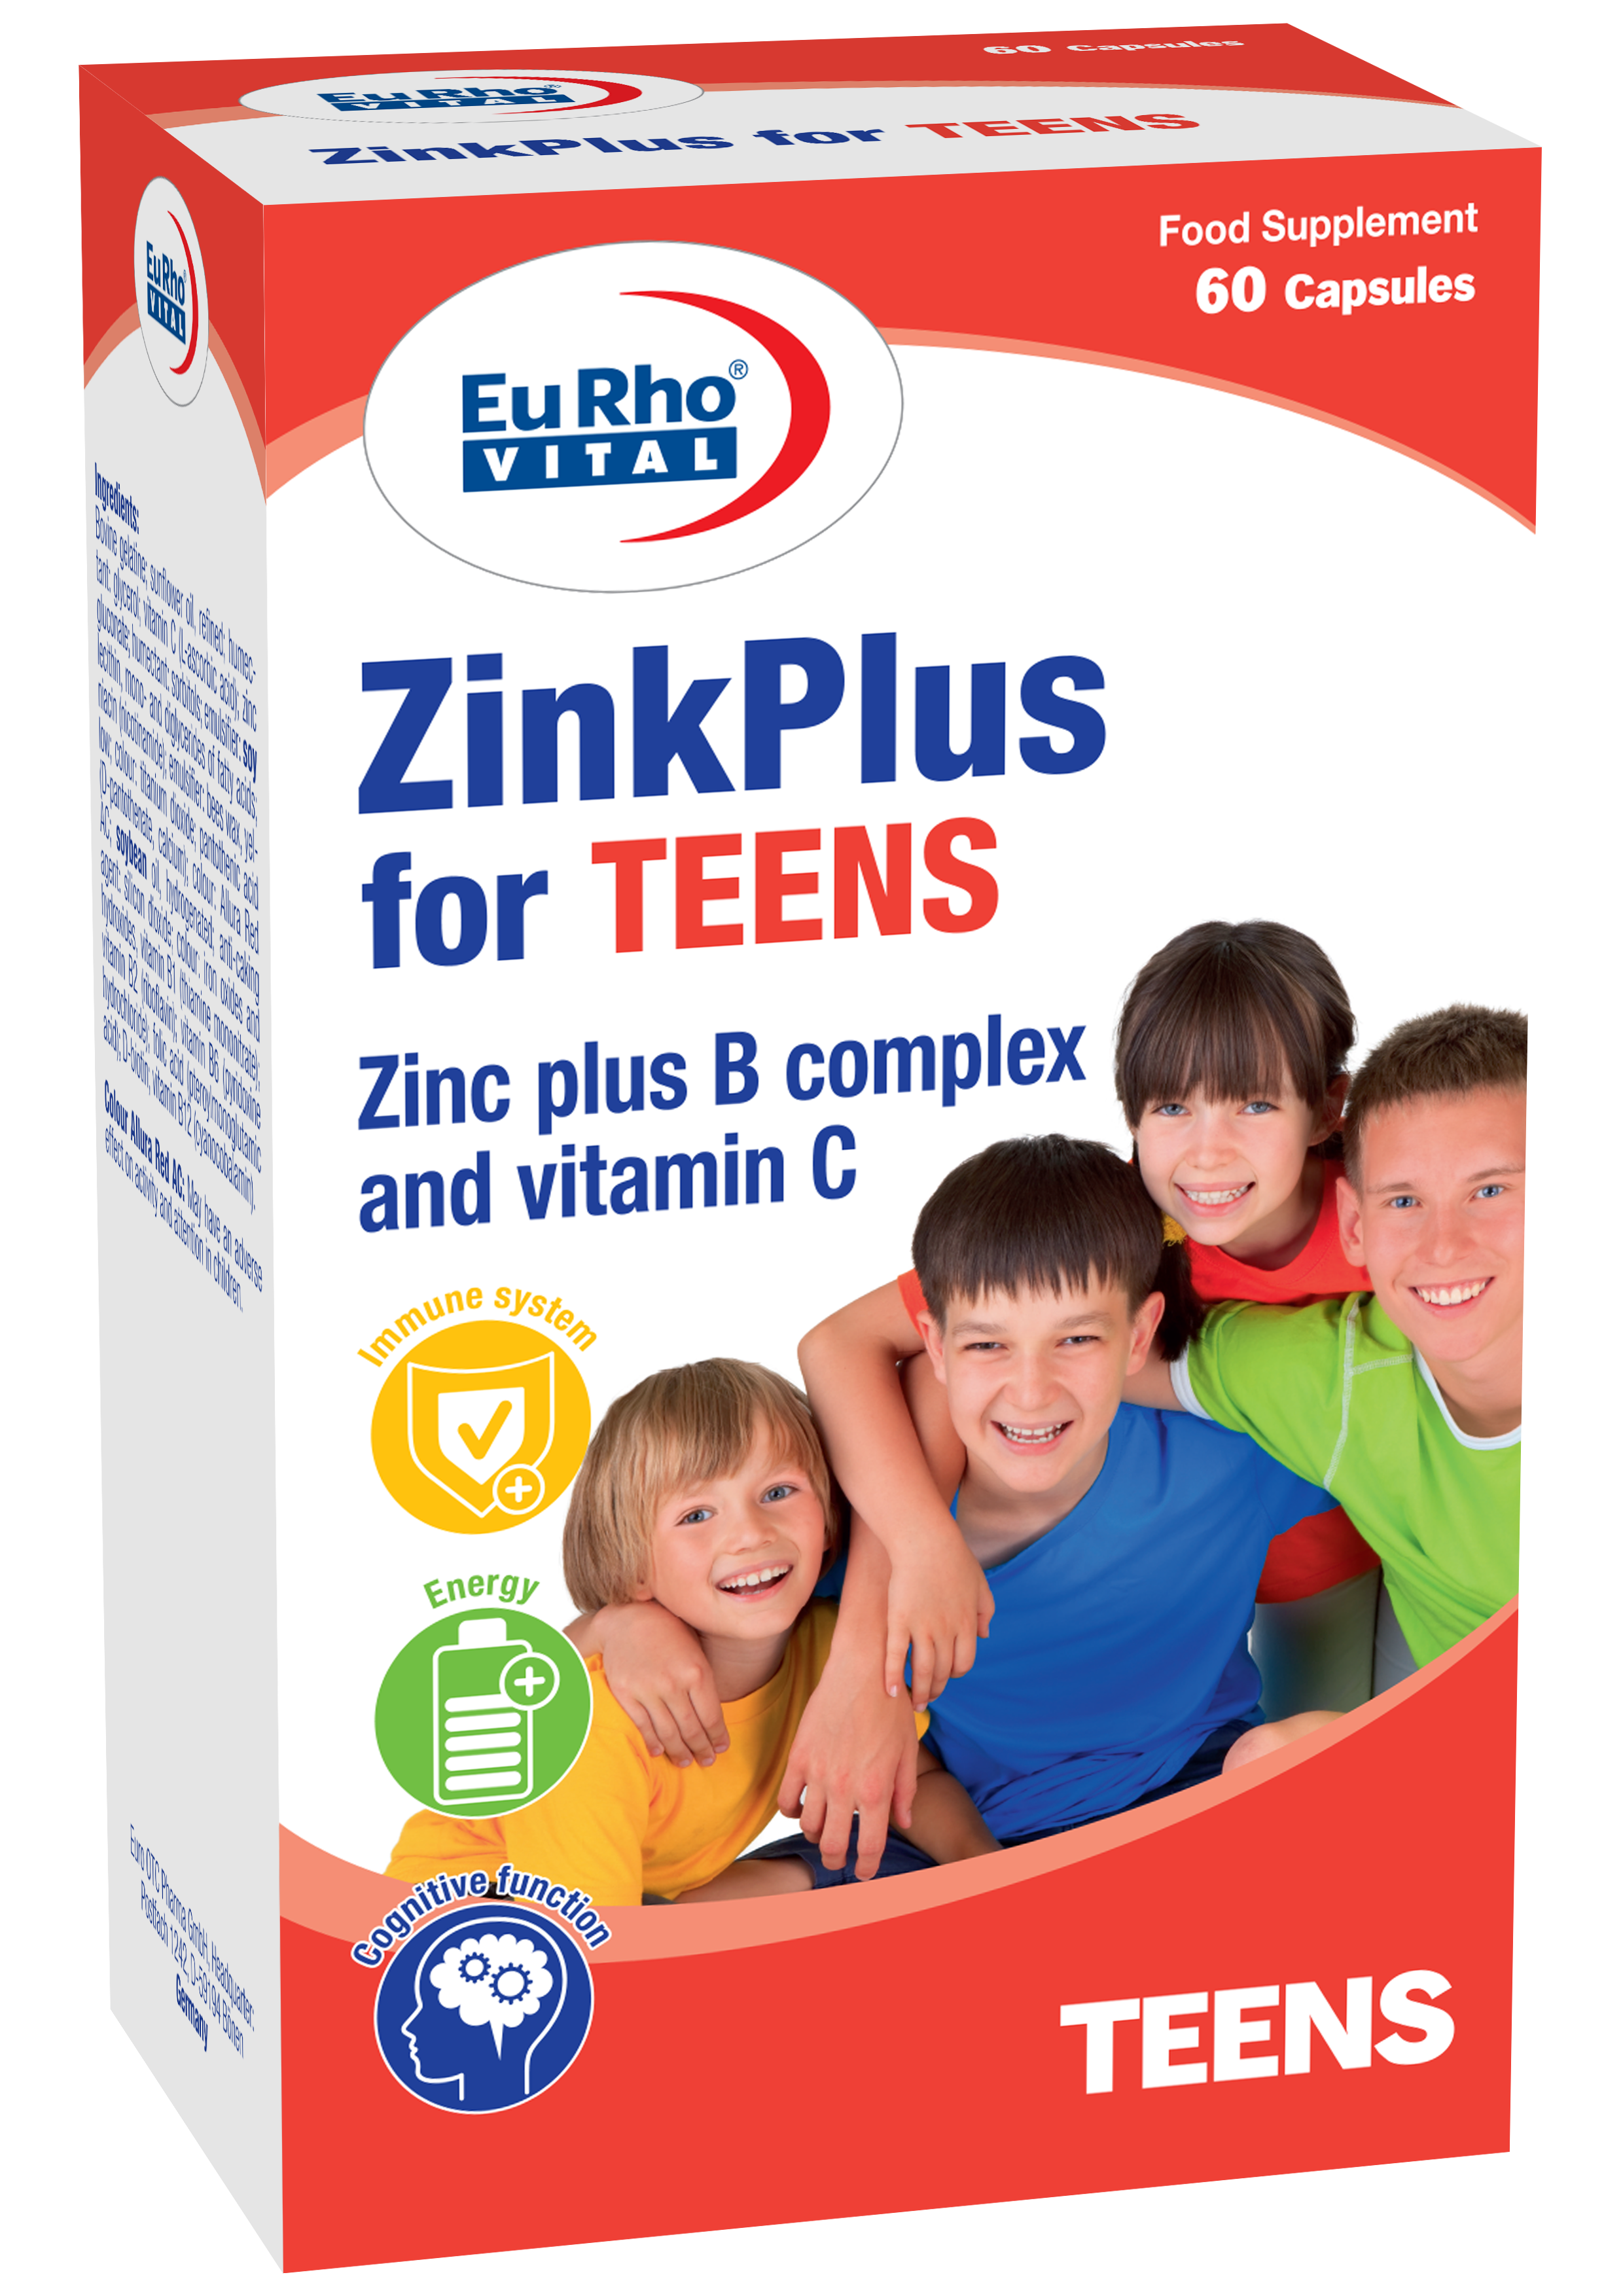 https://hakimanteb.com/wp-content/uploads/2022/07/Zink-Plus-for-teens.png